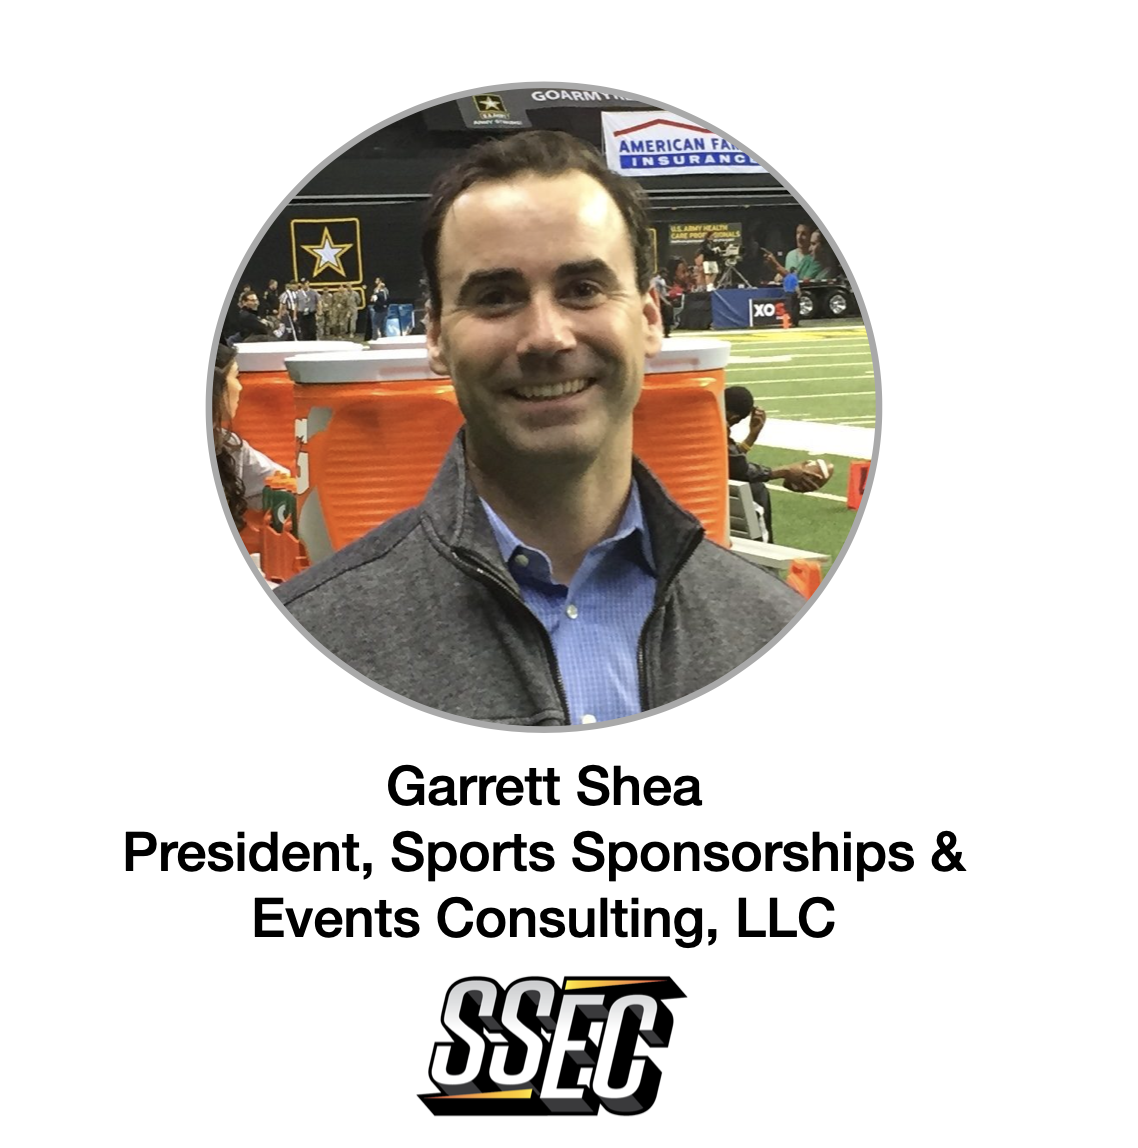 Garrett Shea President of Sports Sponsorships and Events Consulting, LLC